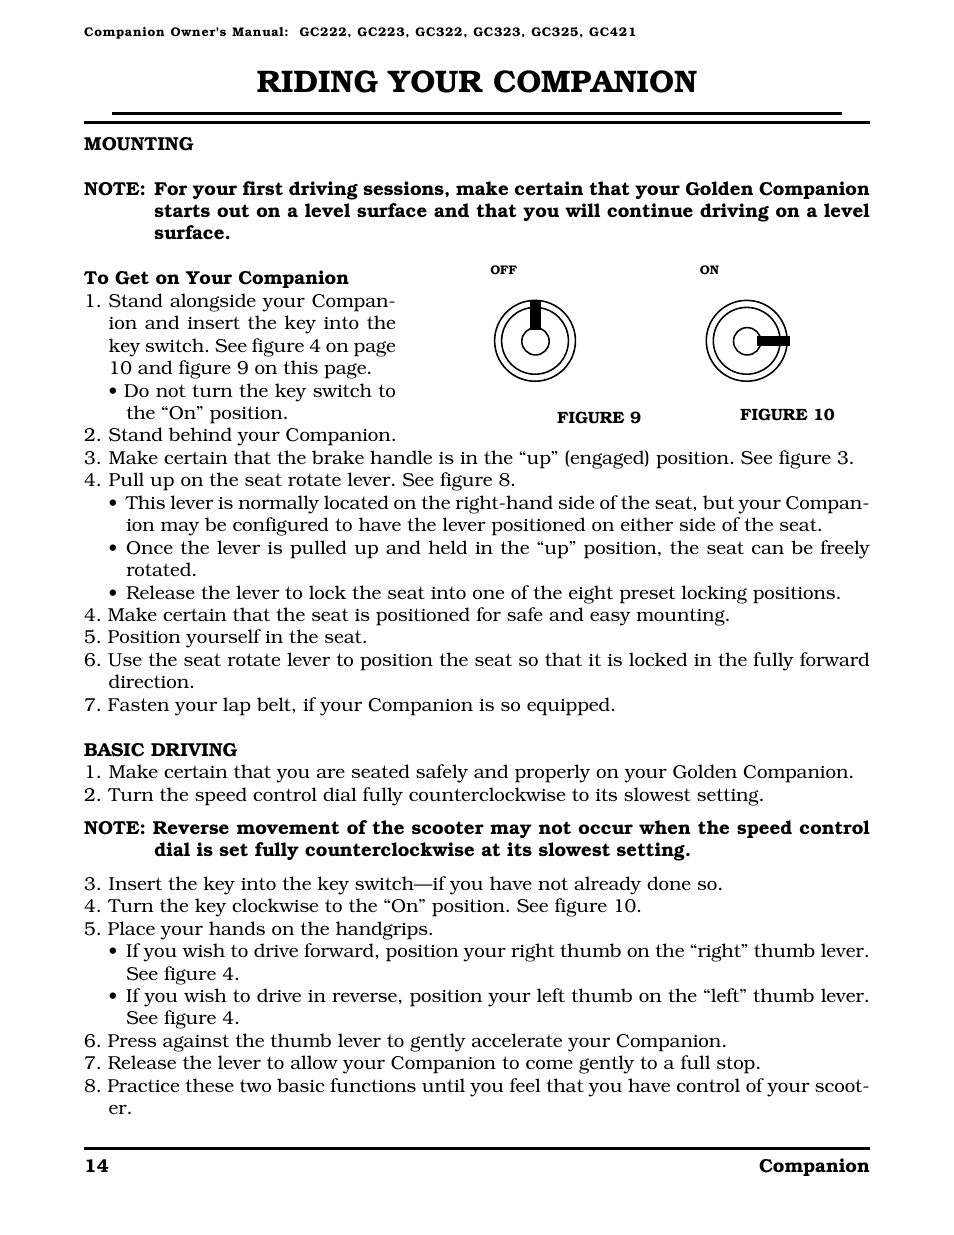 Riding your companion | Golden Technologies Companion II User Manual | Page 16 / 41